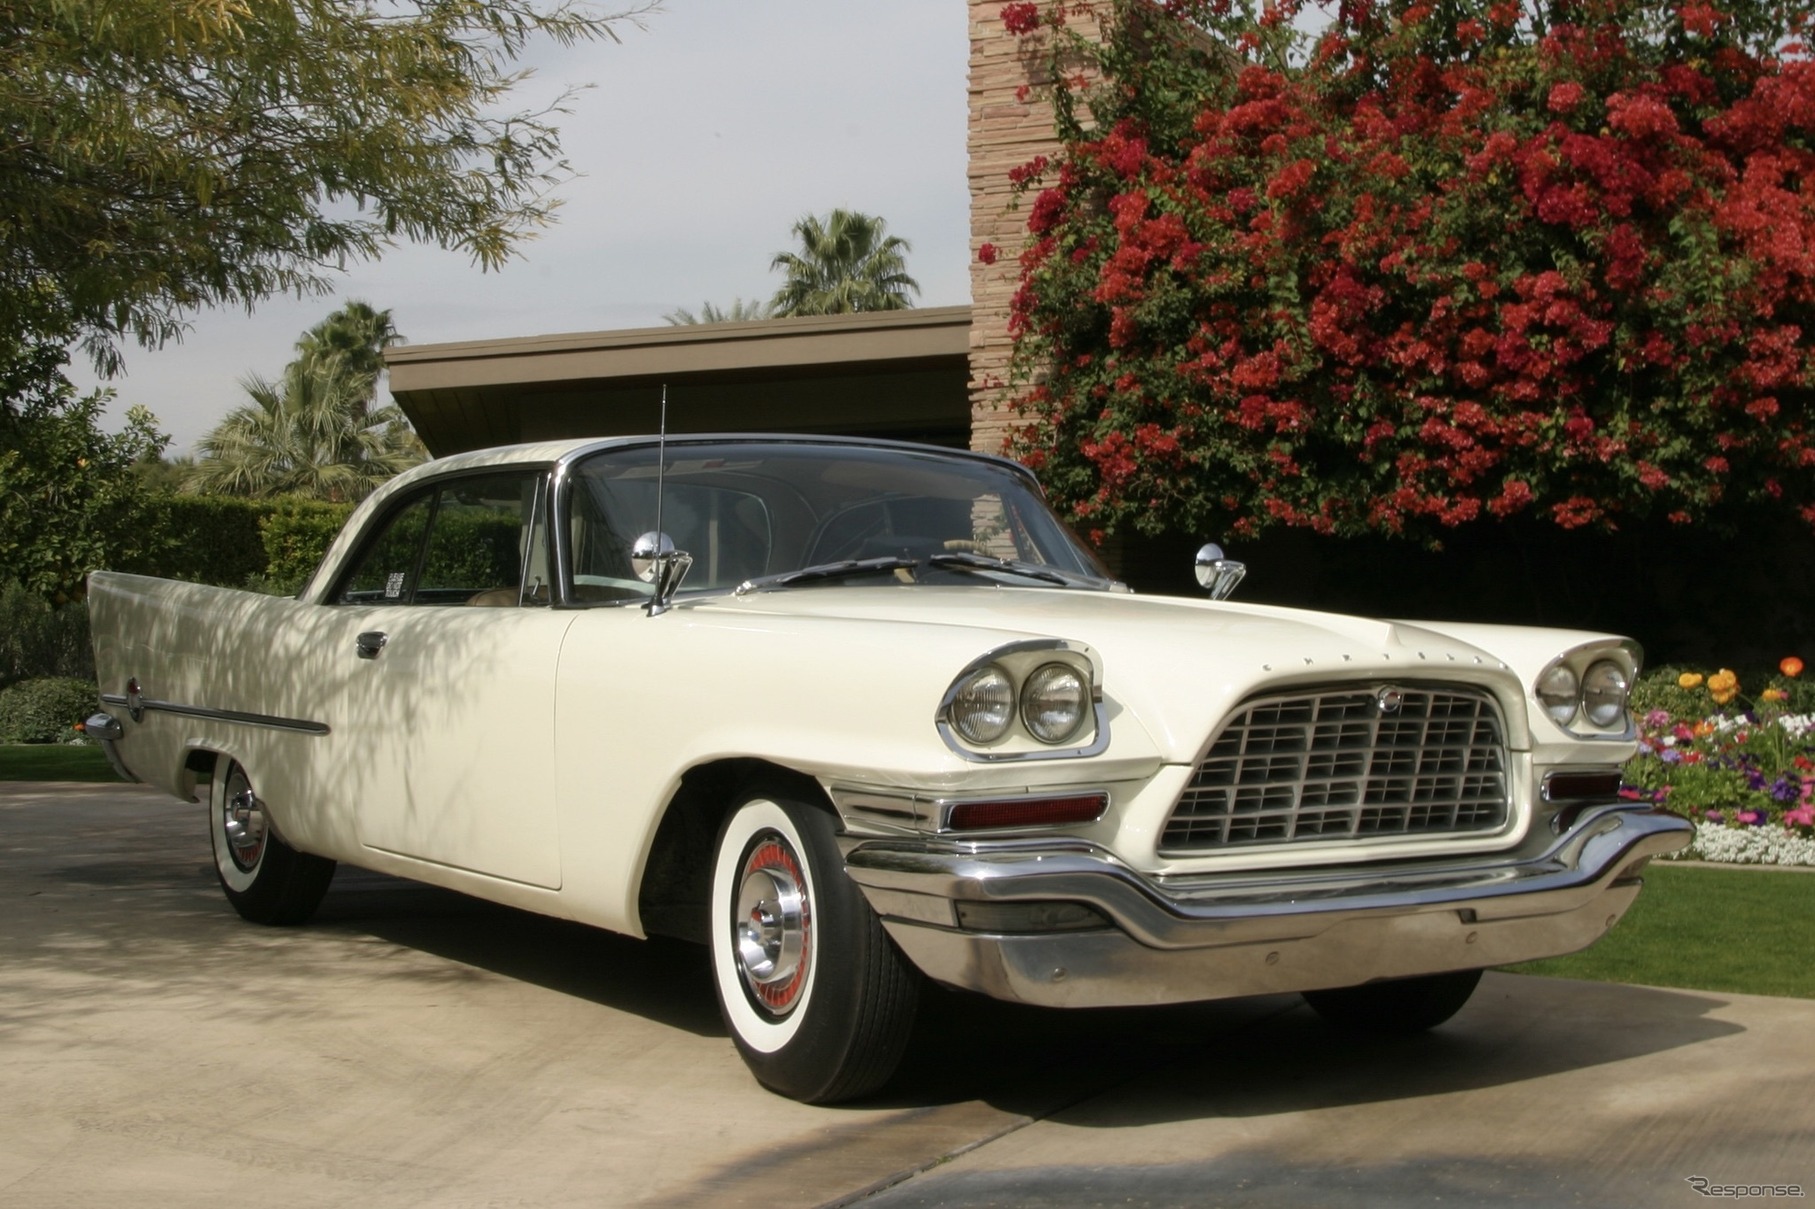 1958 Chrysler 300D。ボンネビルで1958に156.387マイル/h＝251.7km/hの速度記録を達成した